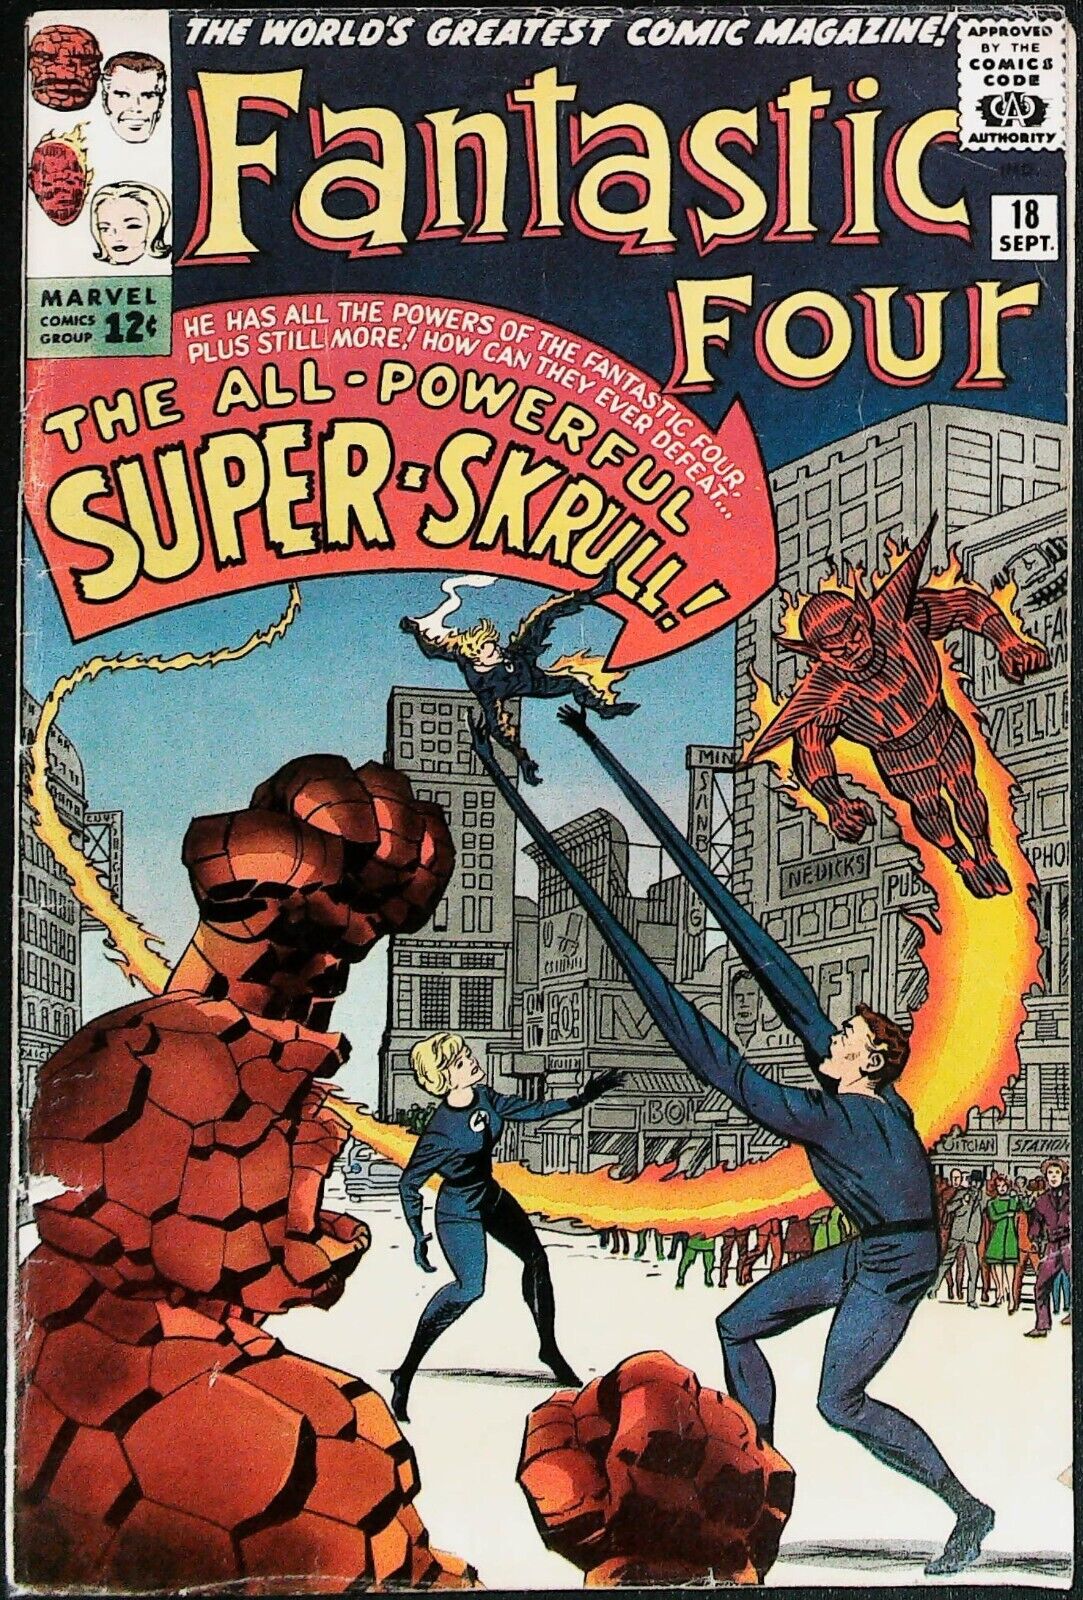 Fantastic Four #18 Vol 1 (1963) KEY *1st Appearance of Super-Skrull* - Low Grade